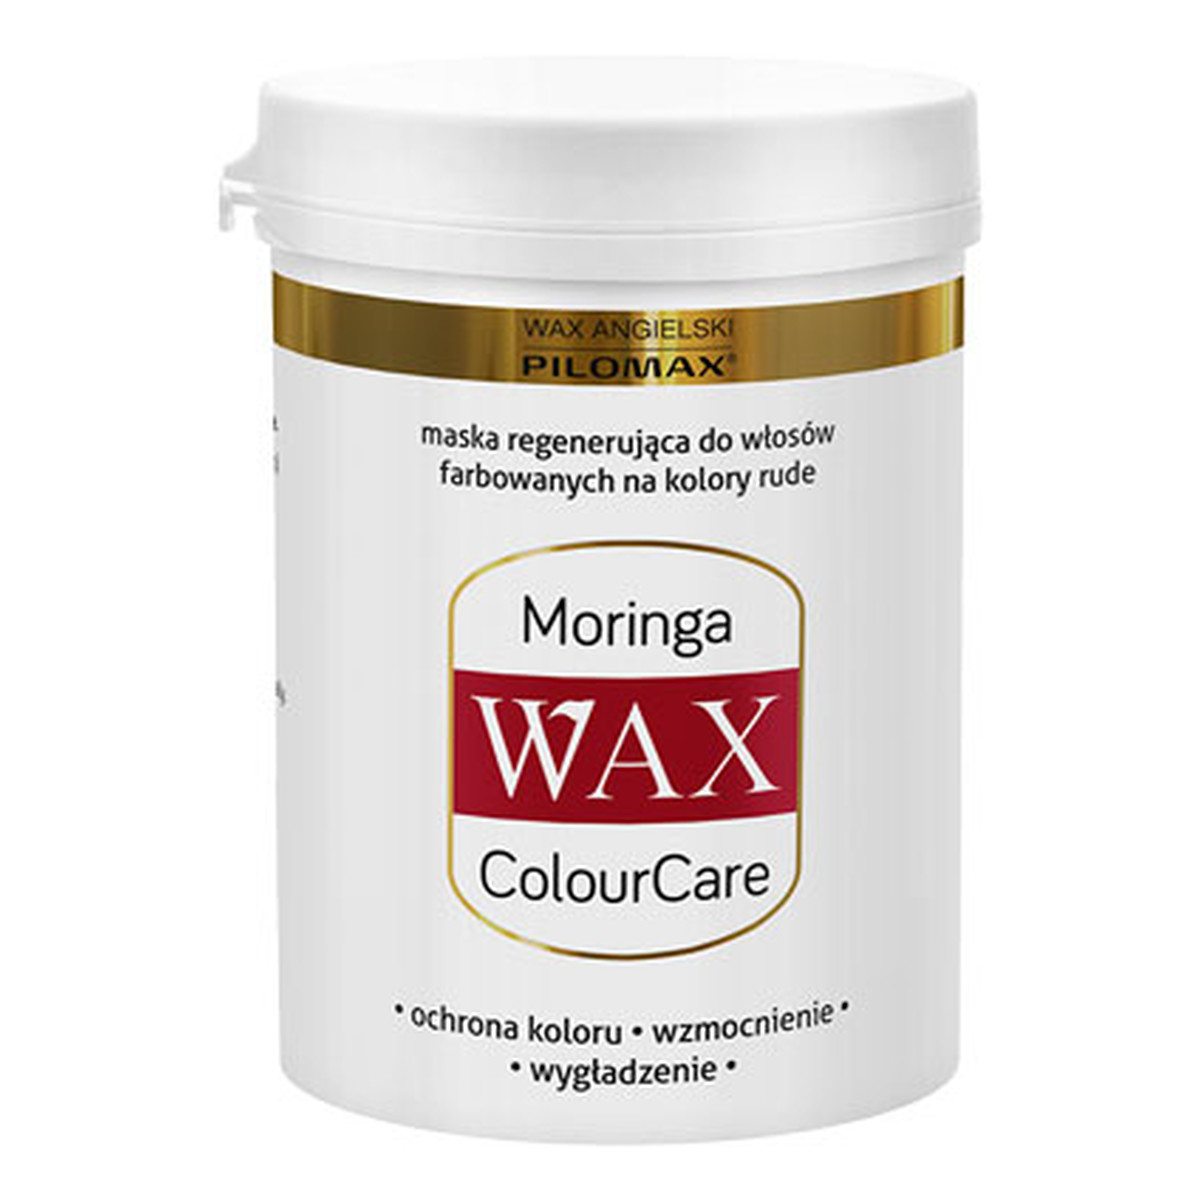 Pilomax Wax Moringa Colour Care Maska Regenerująca Do Włosów Farbowanych Na Kolory Rude 240ml